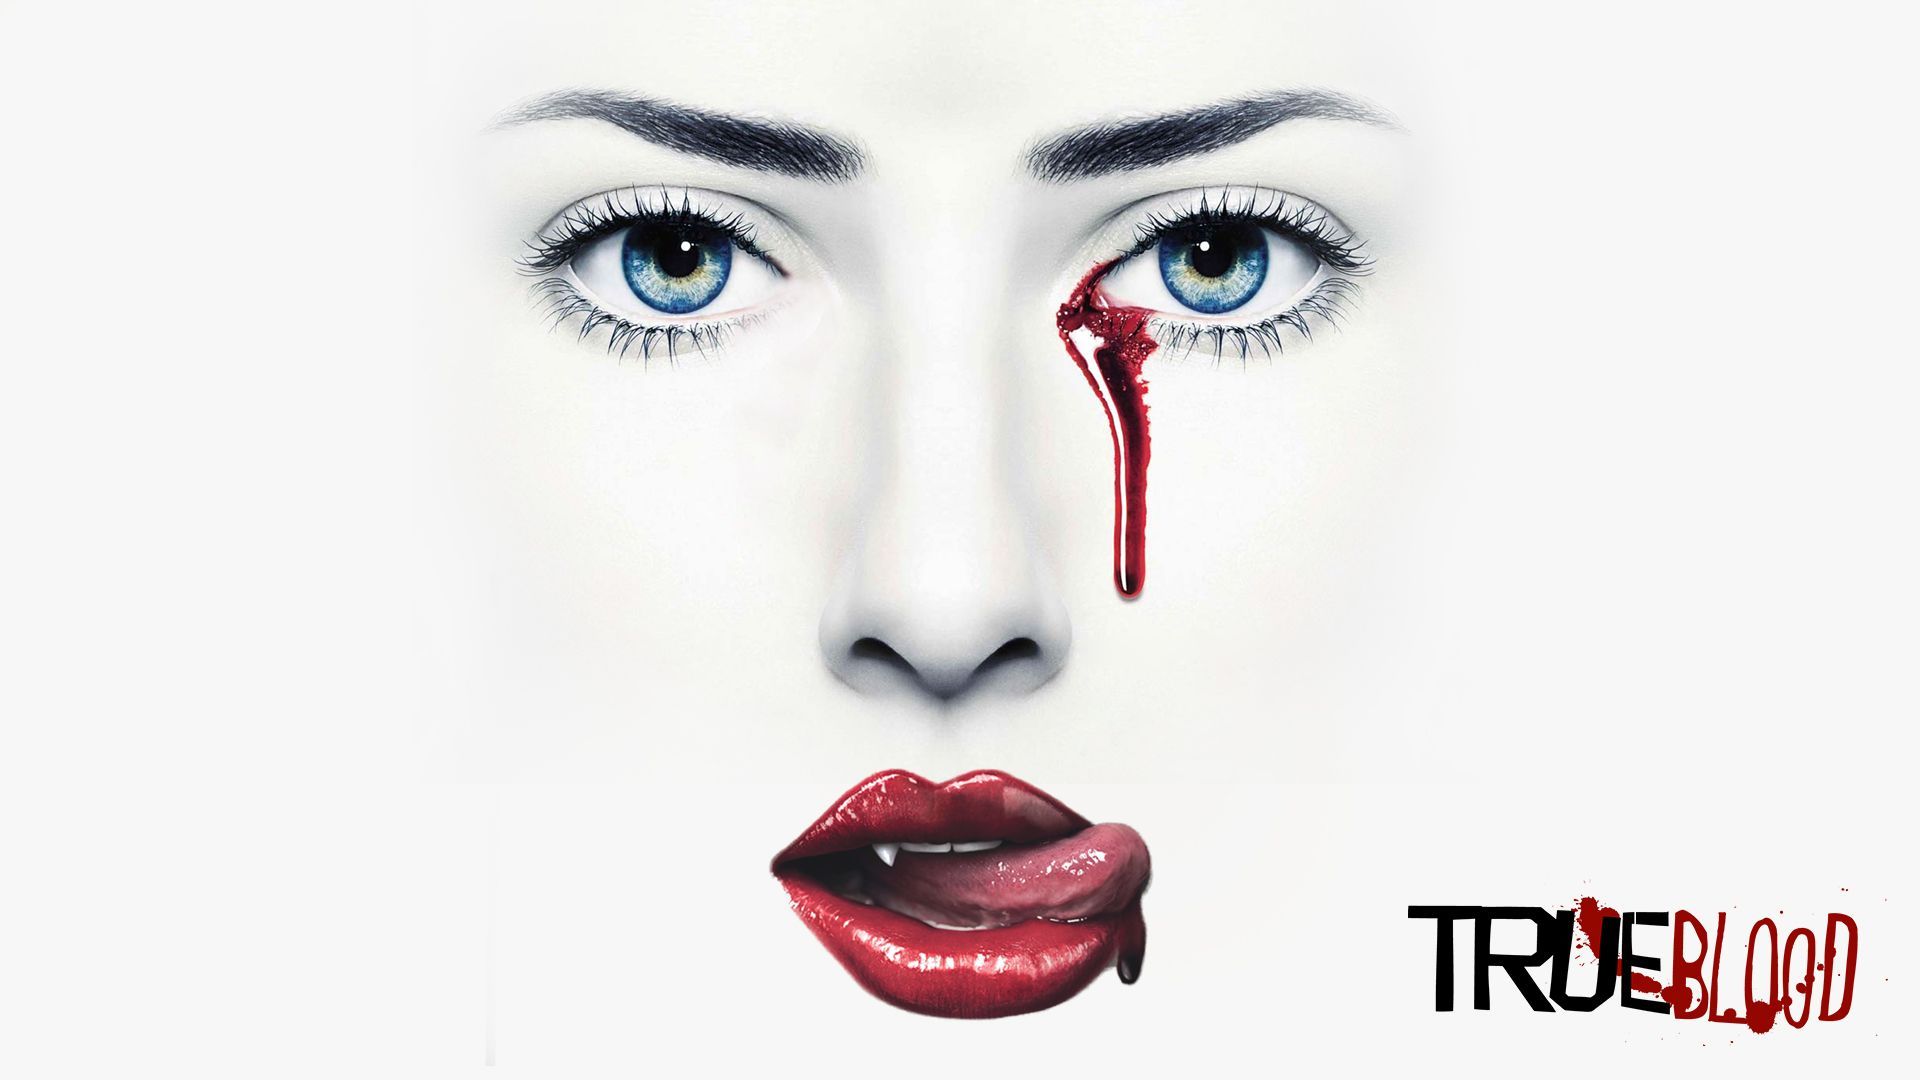 Wallpapers True Blood by Alexandreholz on DeviantArt